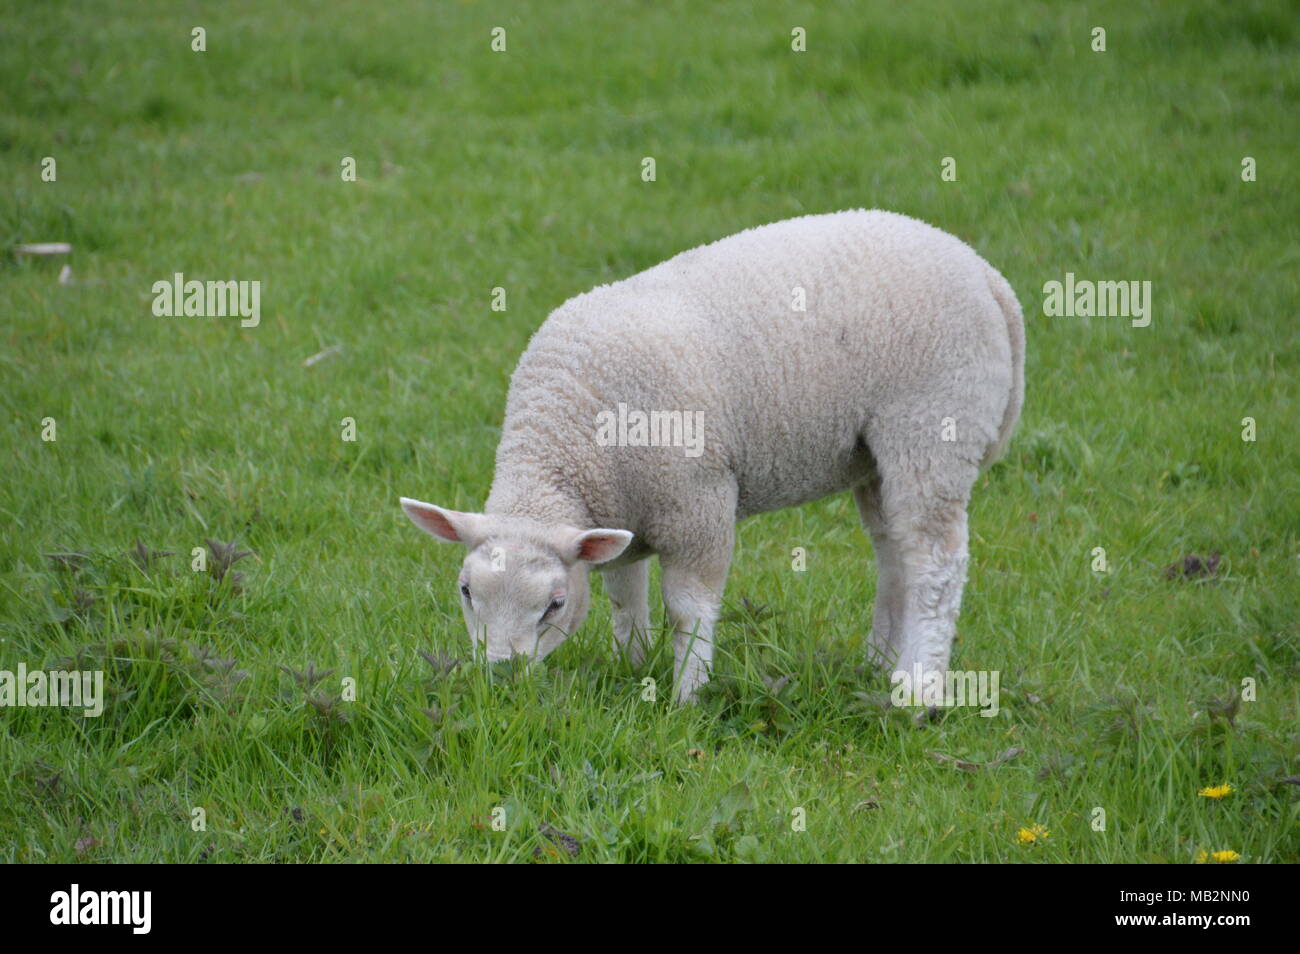 Lamb Eating Grass Stock Photo